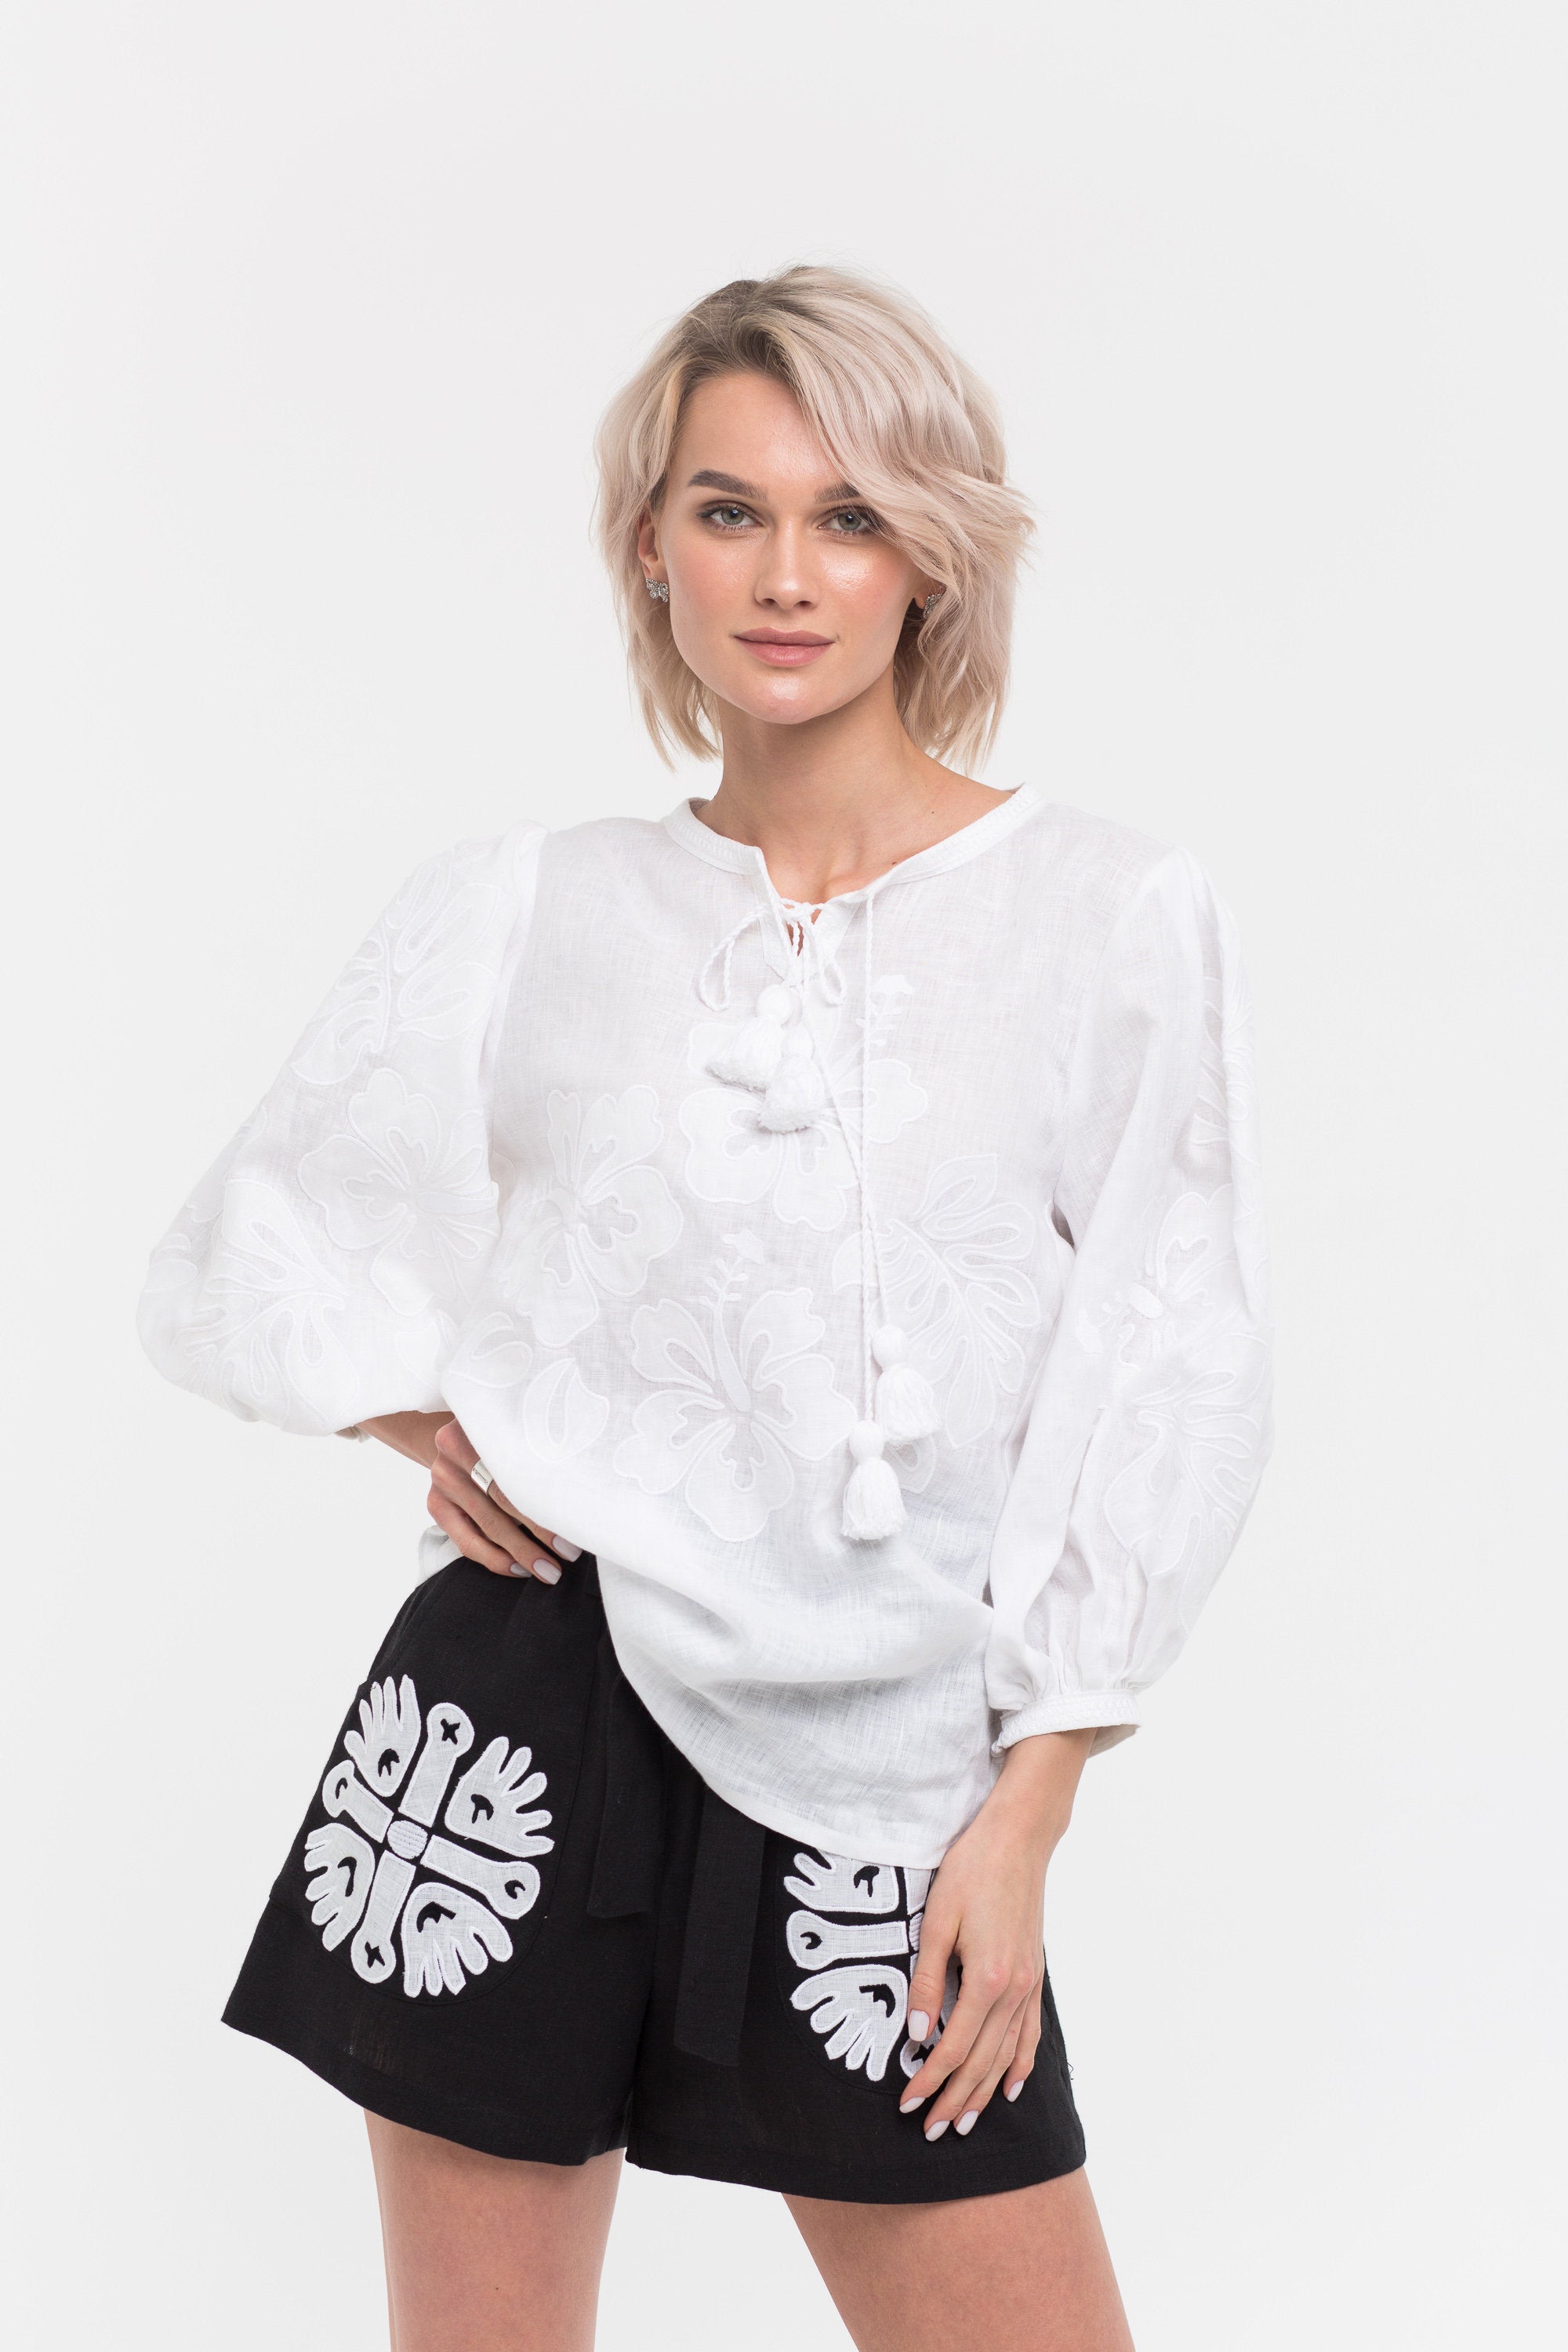 Applique embroidered fashion vyshyvanka set shorts and blouse White linen boho clothes Ukraine embroidery